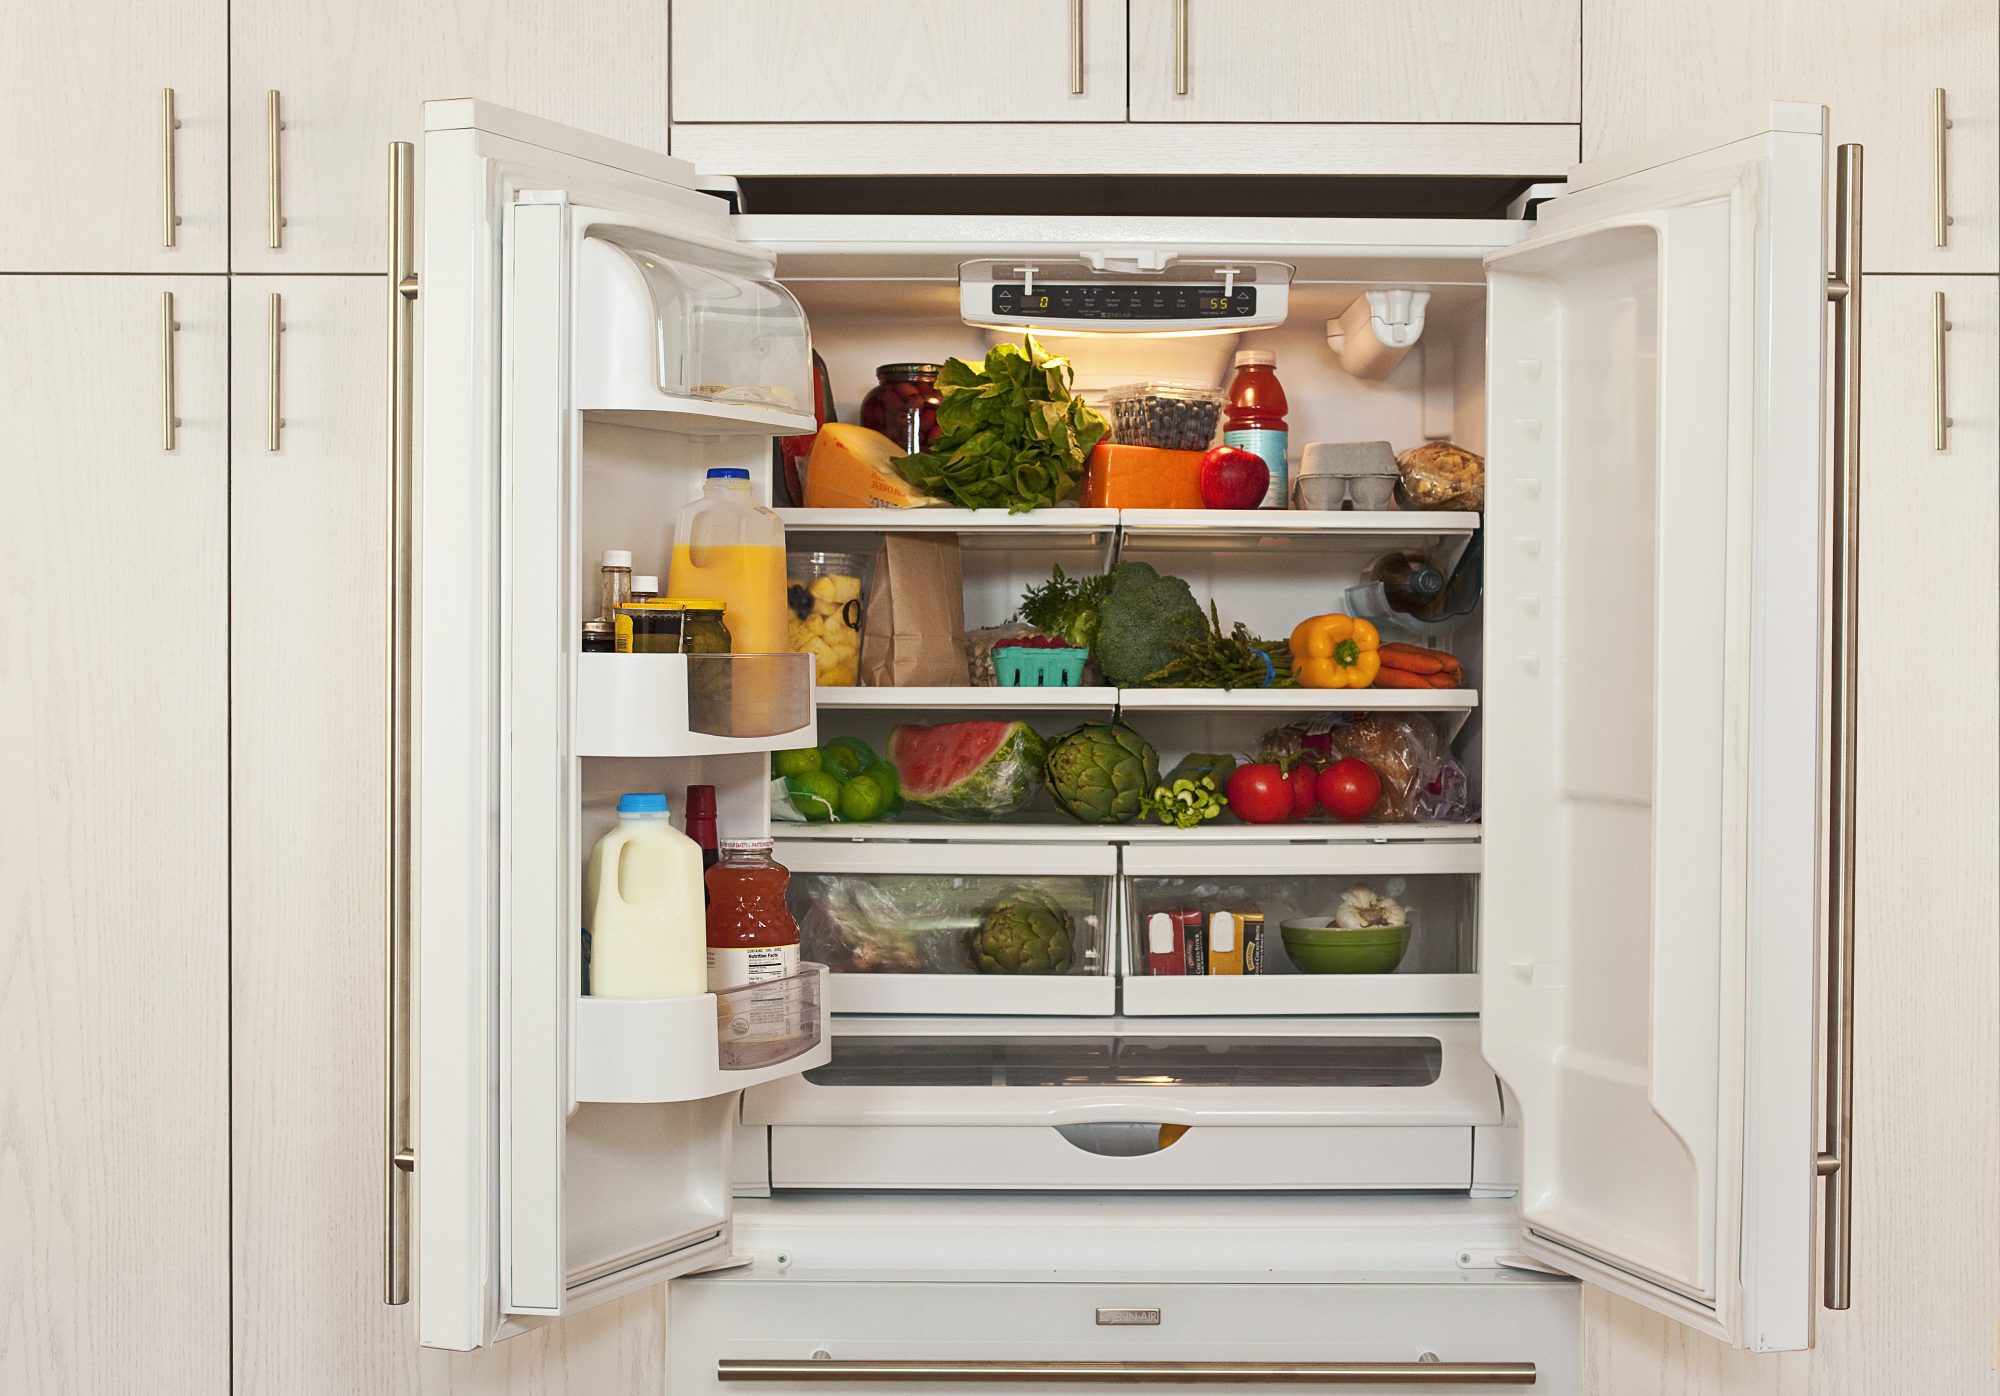 refrigerator getty 7/20/20